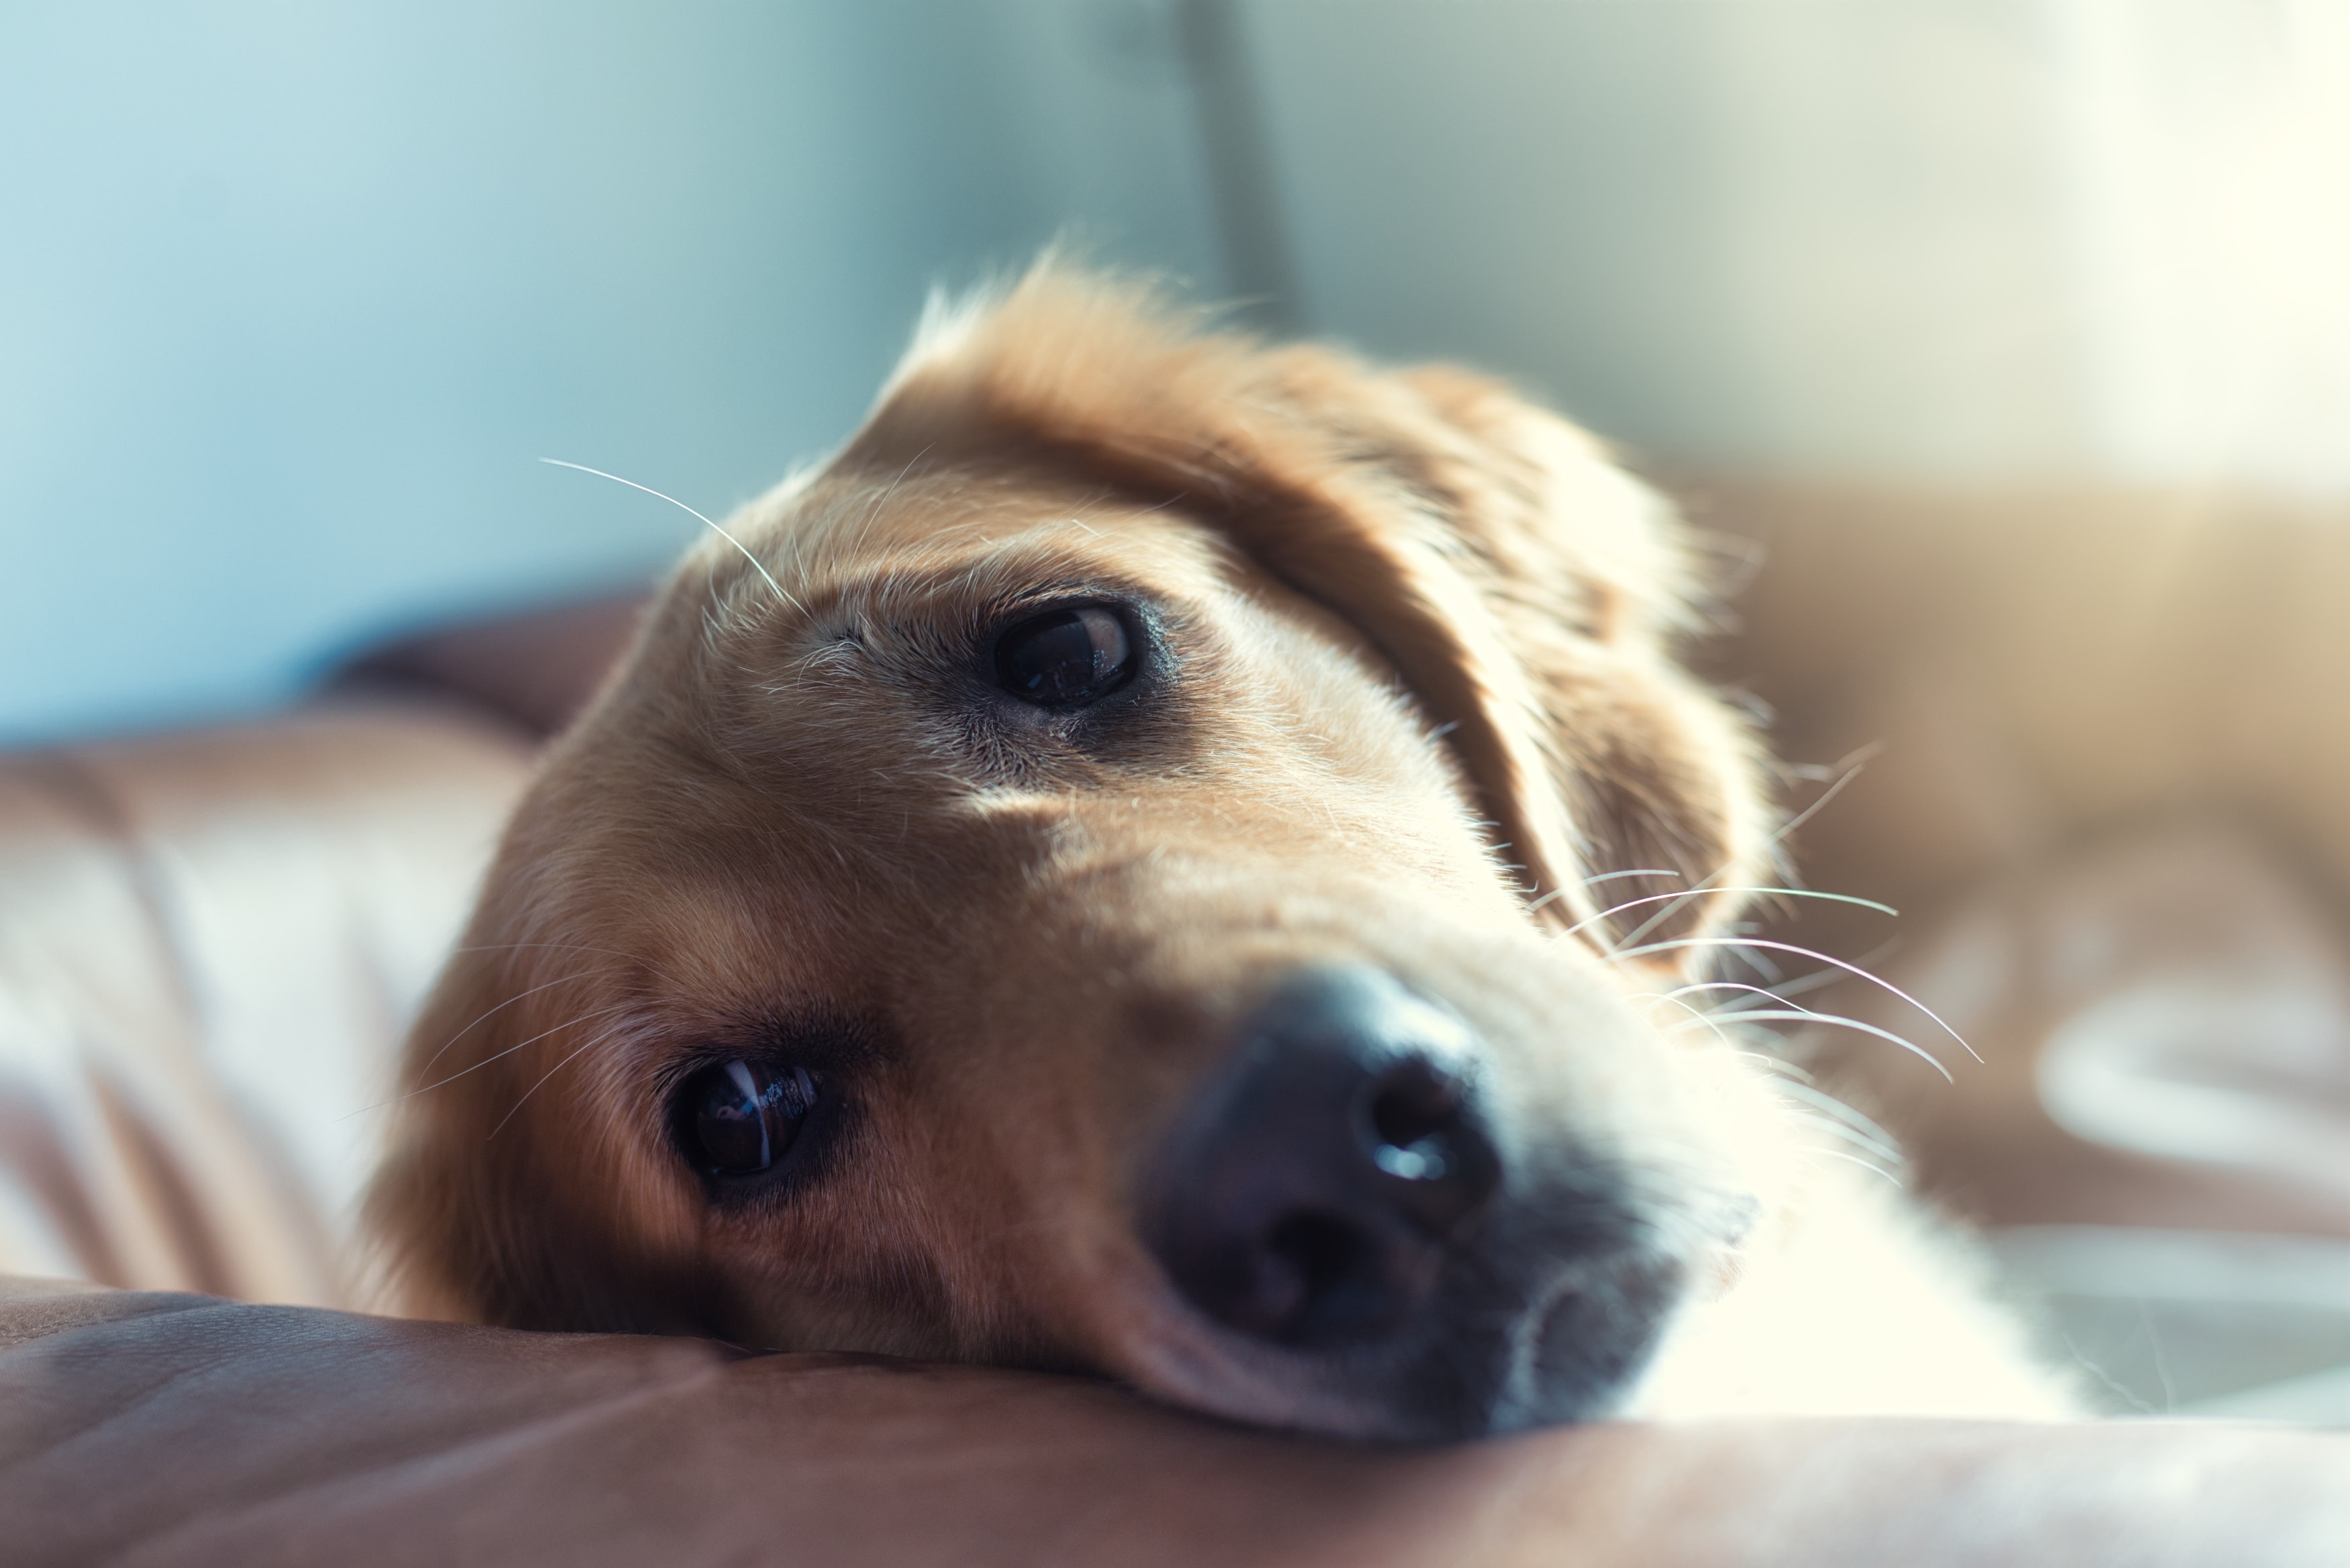 Boala Chagas la câini - diagnosticare, tratament și prevenție